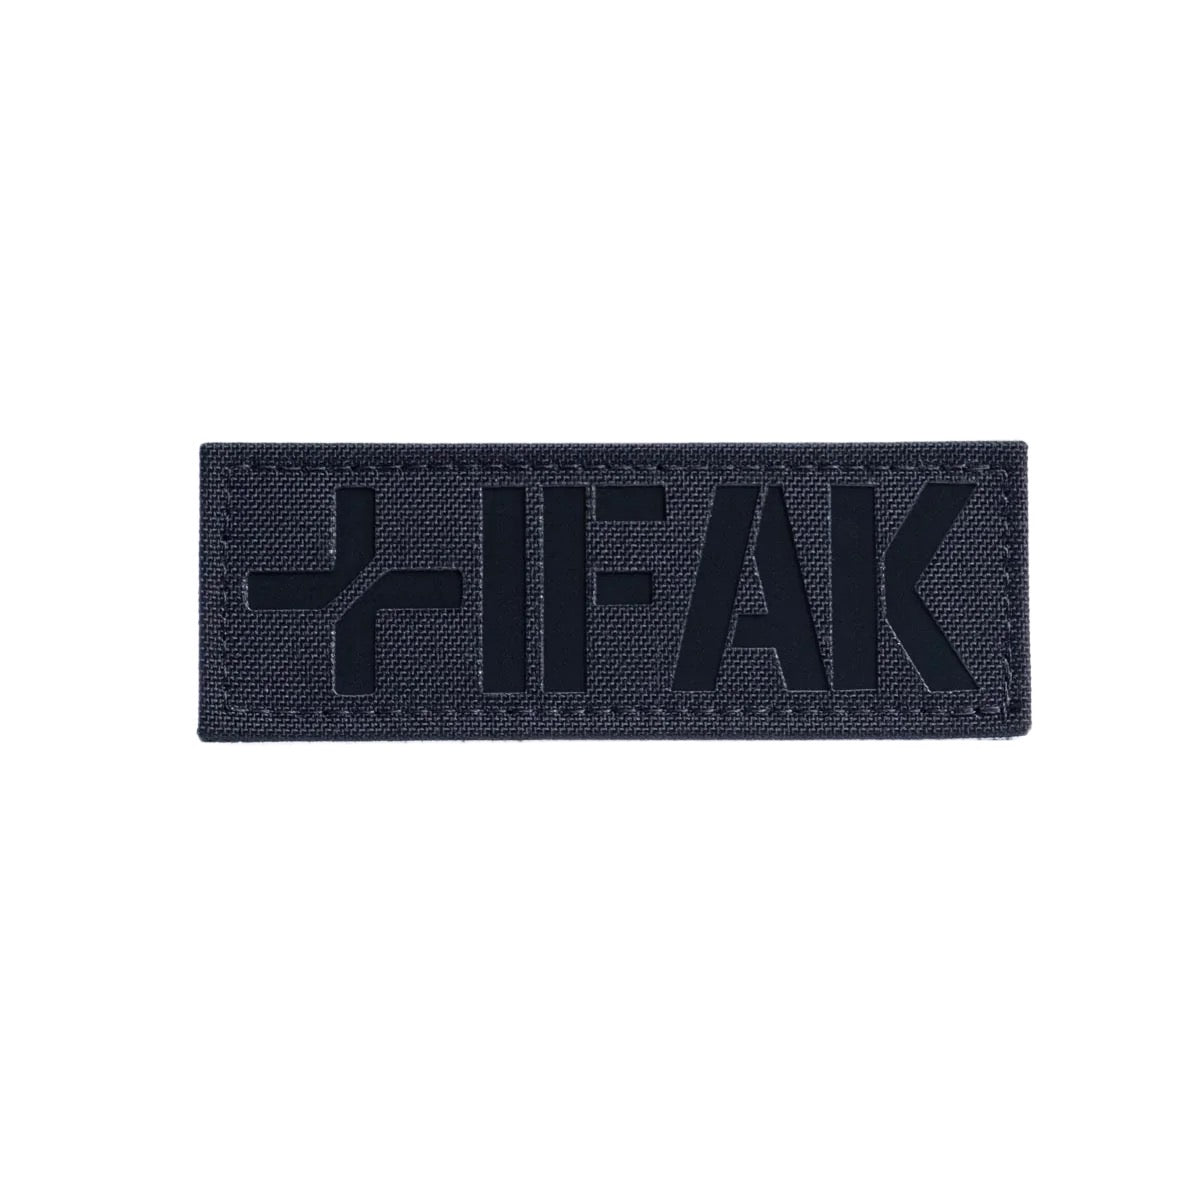 TERRA B® IFAK Patch - Black "Black Edition"